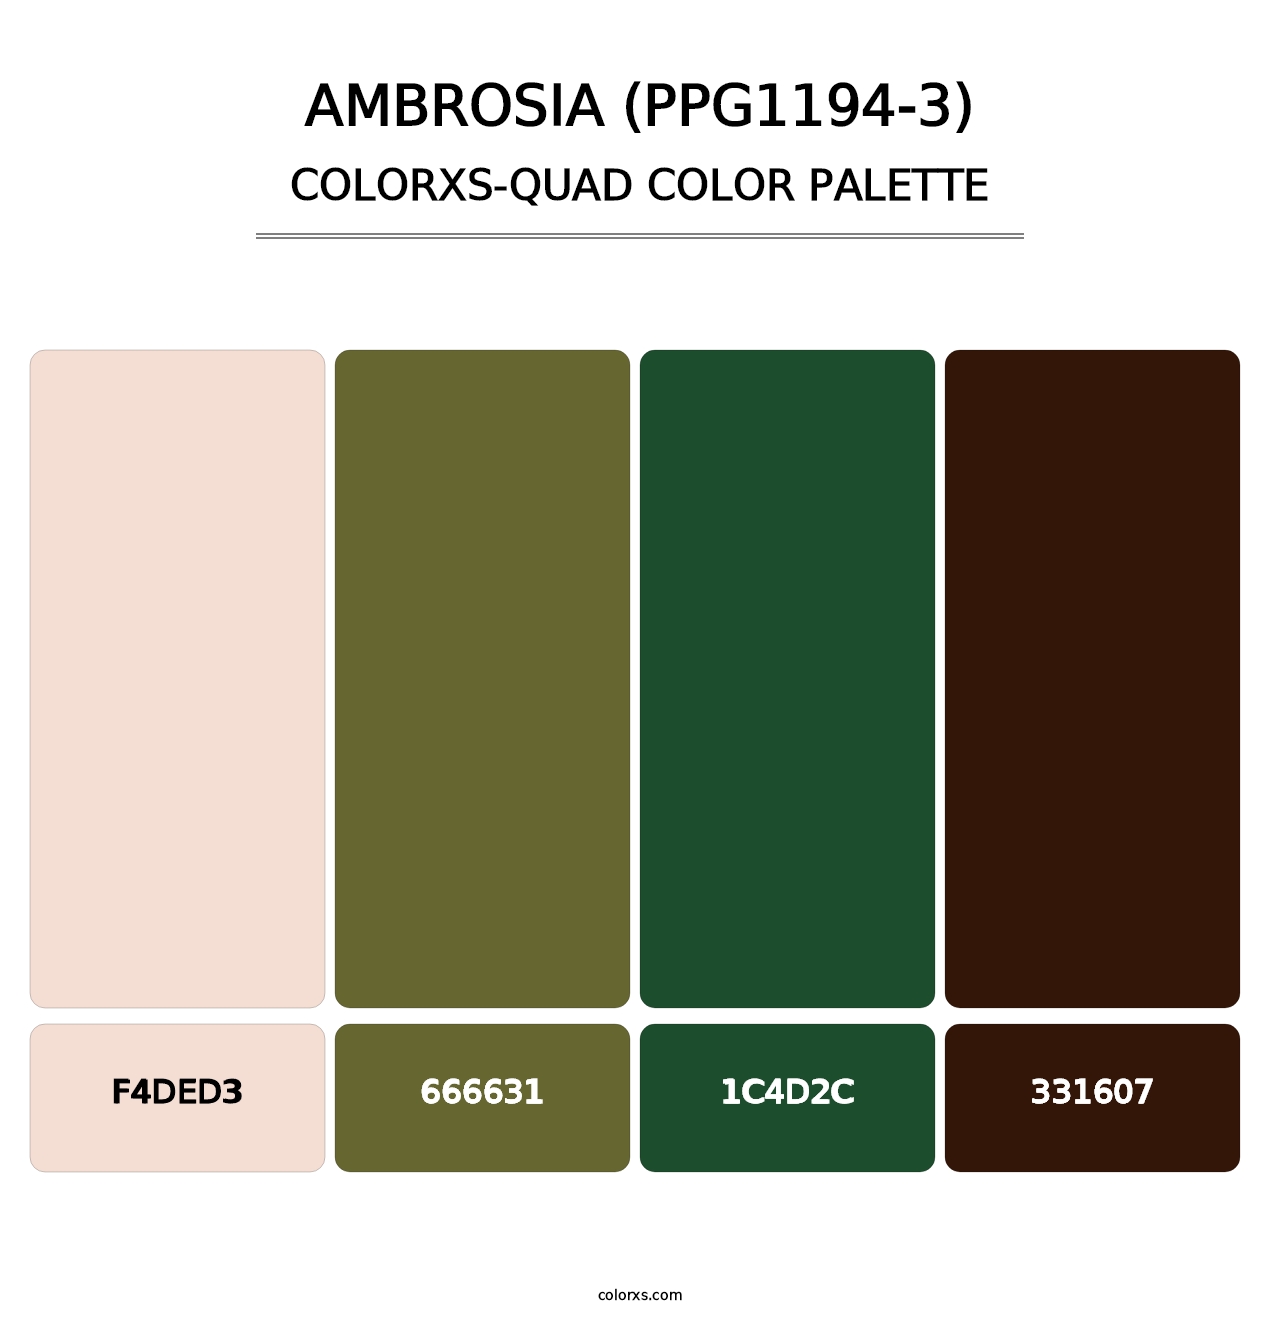 Ambrosia (PPG1194-3) - Colorxs Quad Palette